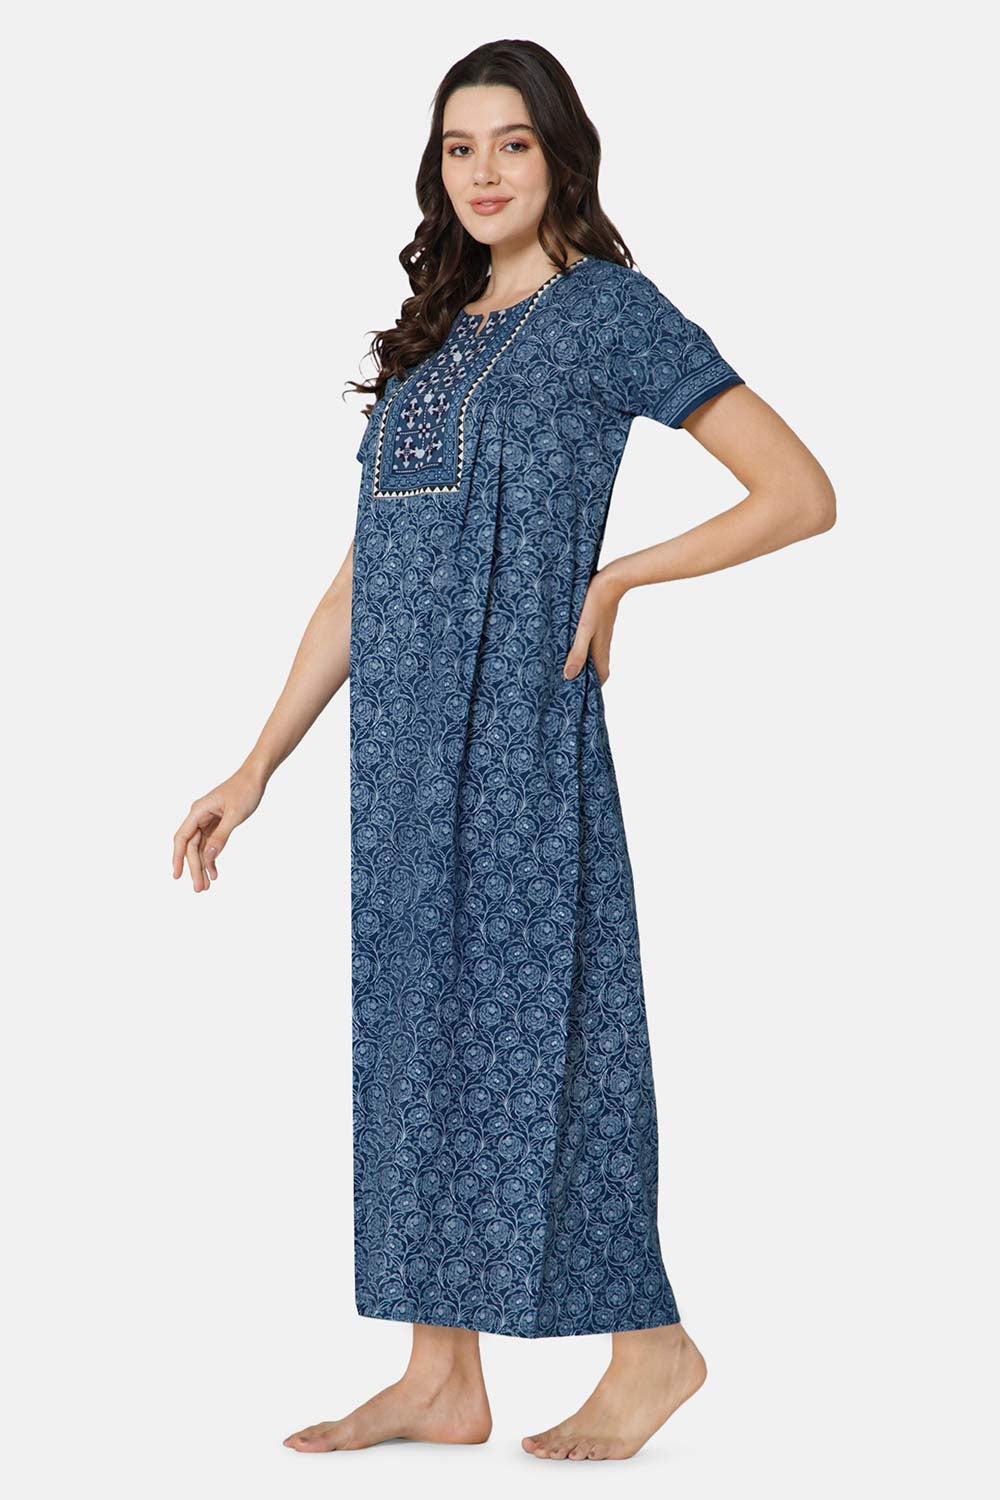 Naidu Hall A-line Women's Nighty Full Length Half Sleeve  - Blue - R136